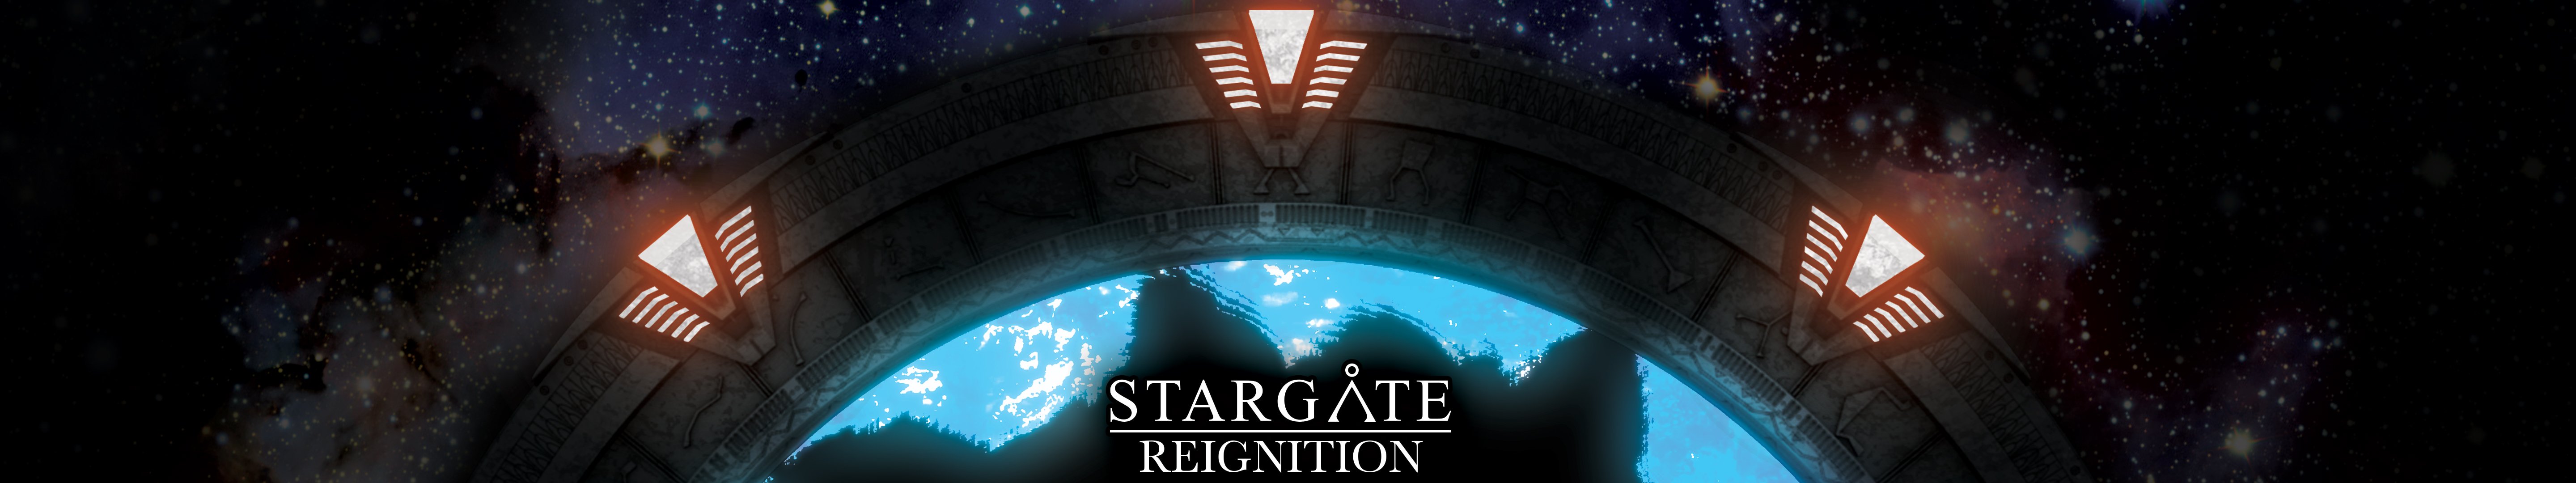 Stargate Desktop Backgrounds Dual Monitor - HD Wallpaper 